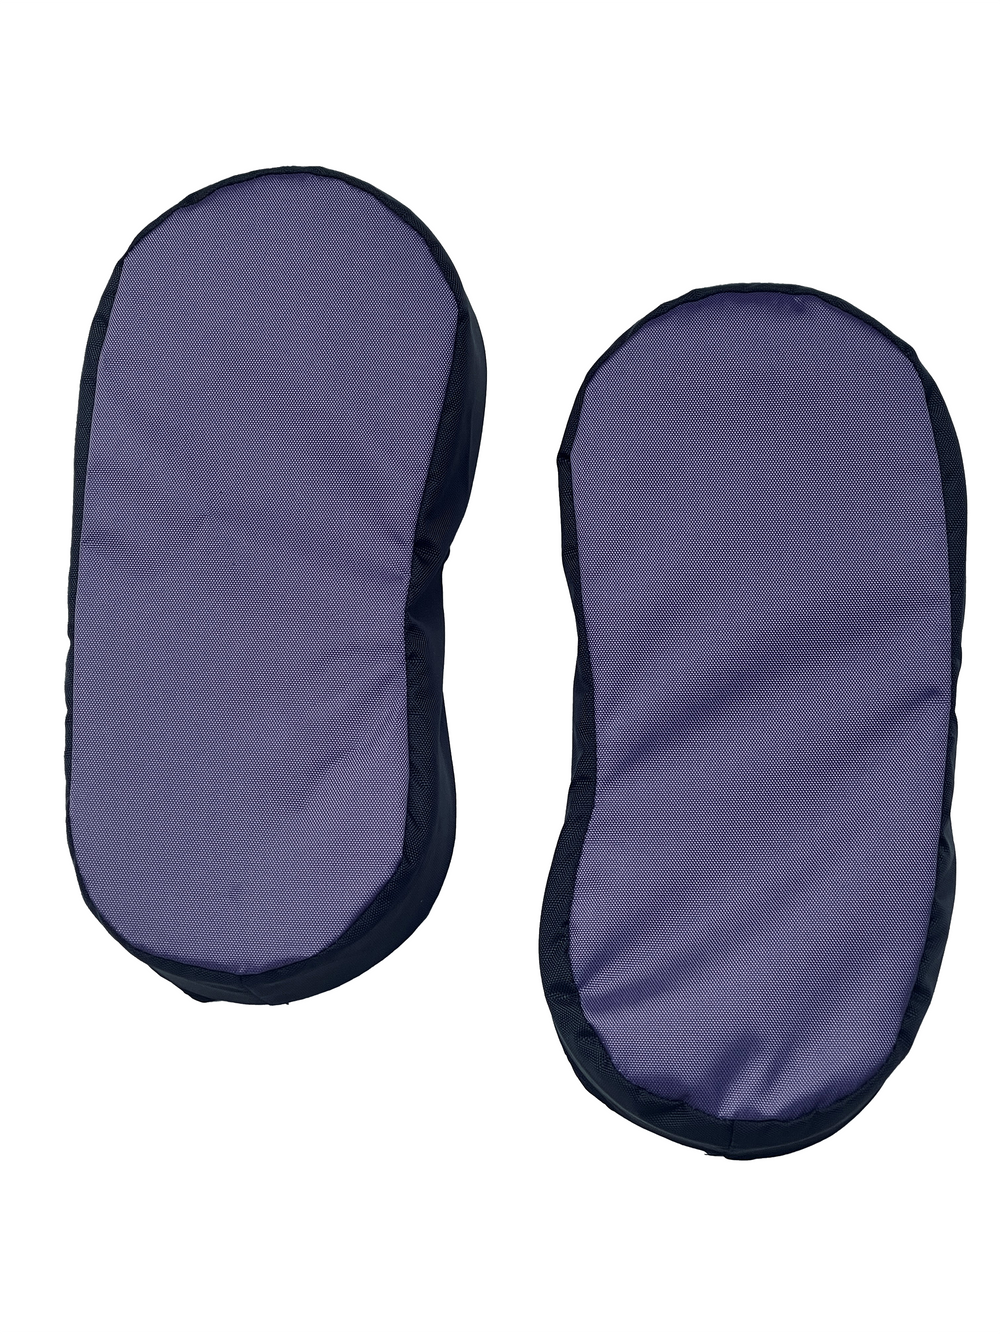 Balance Matters Level 1 Foam Foot Pads & Purple Washable Covers